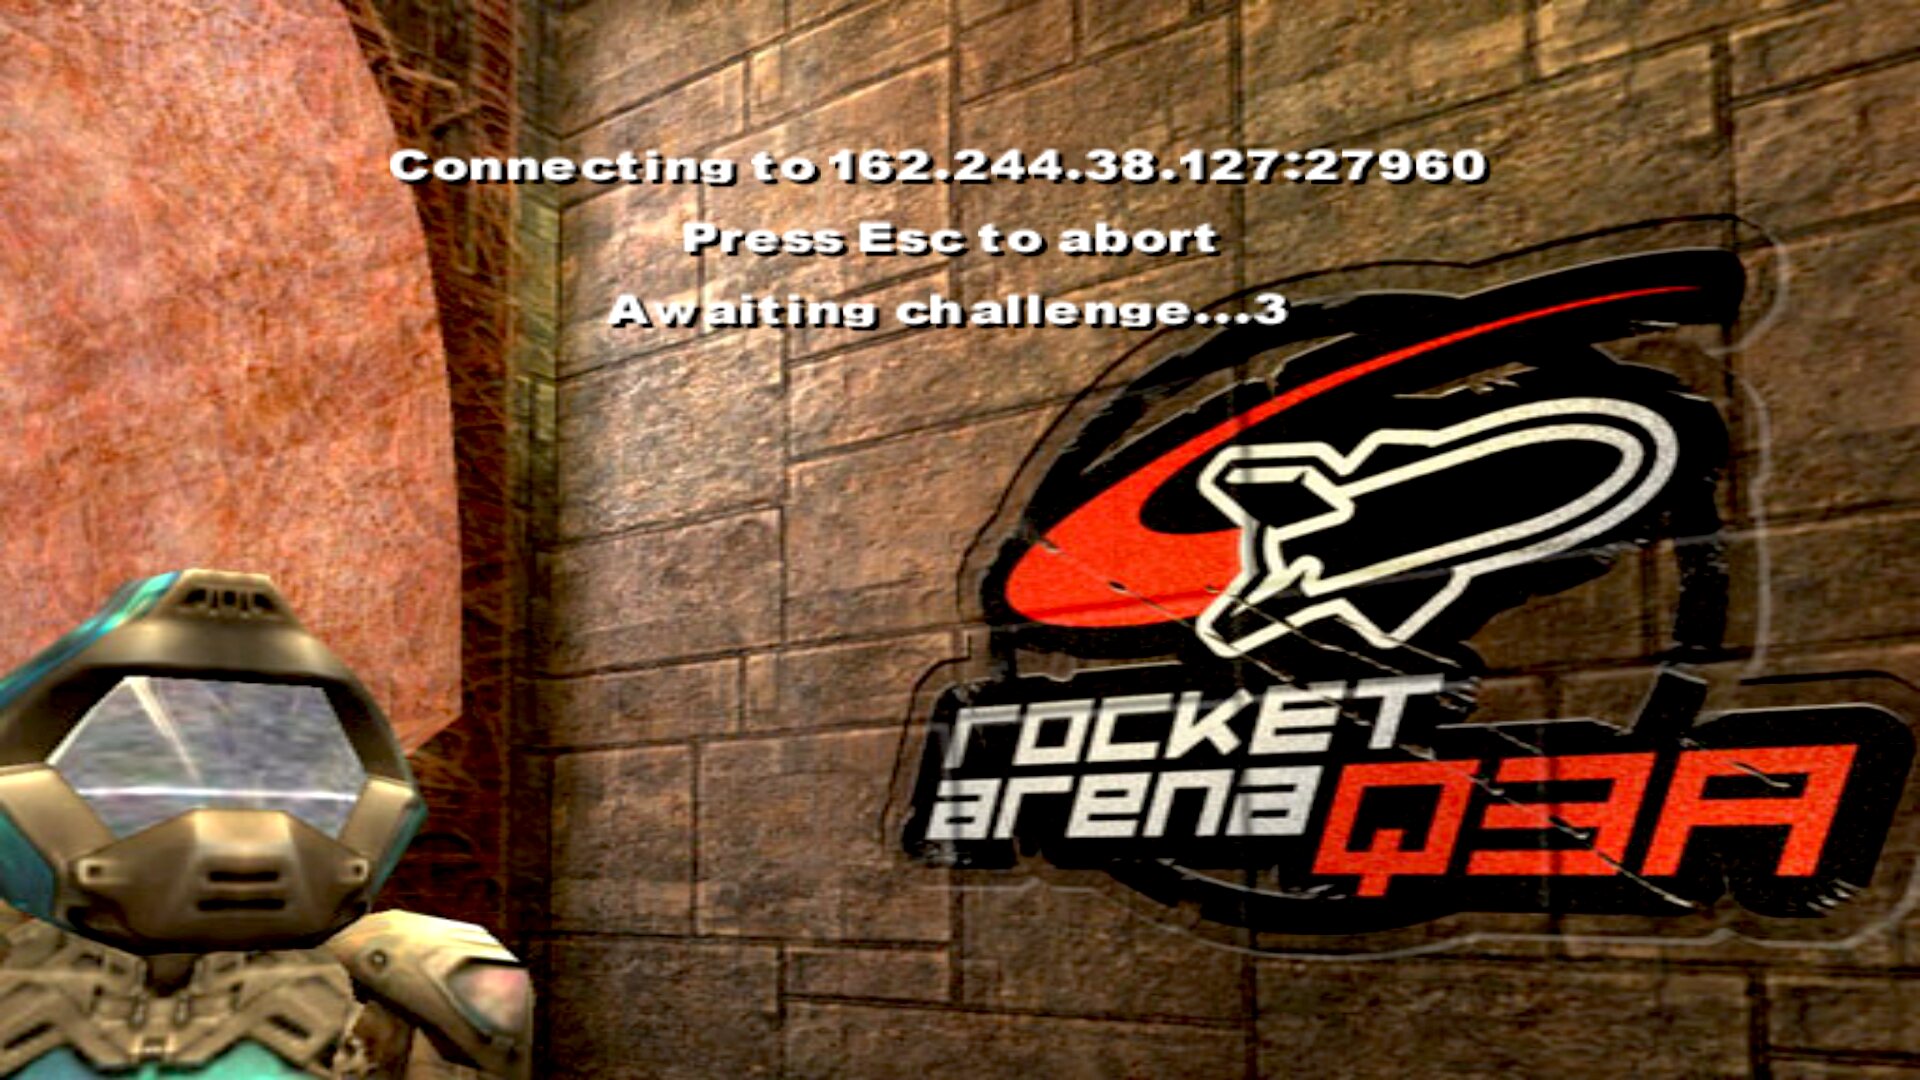 quake 2 rocket arena